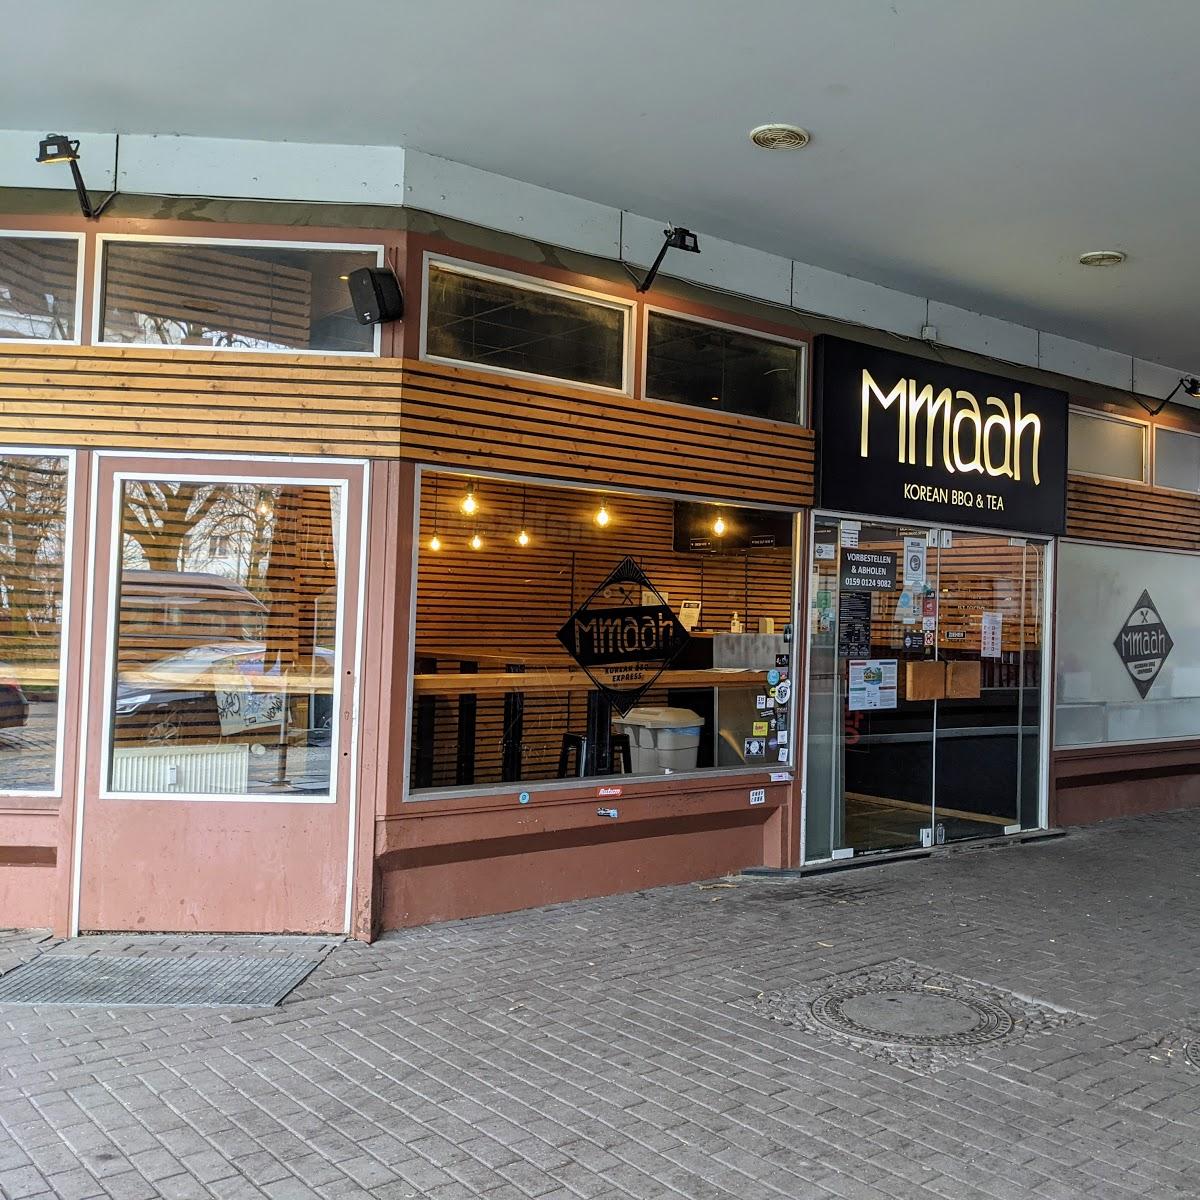 Restaurant "Mmaah" in Berlin